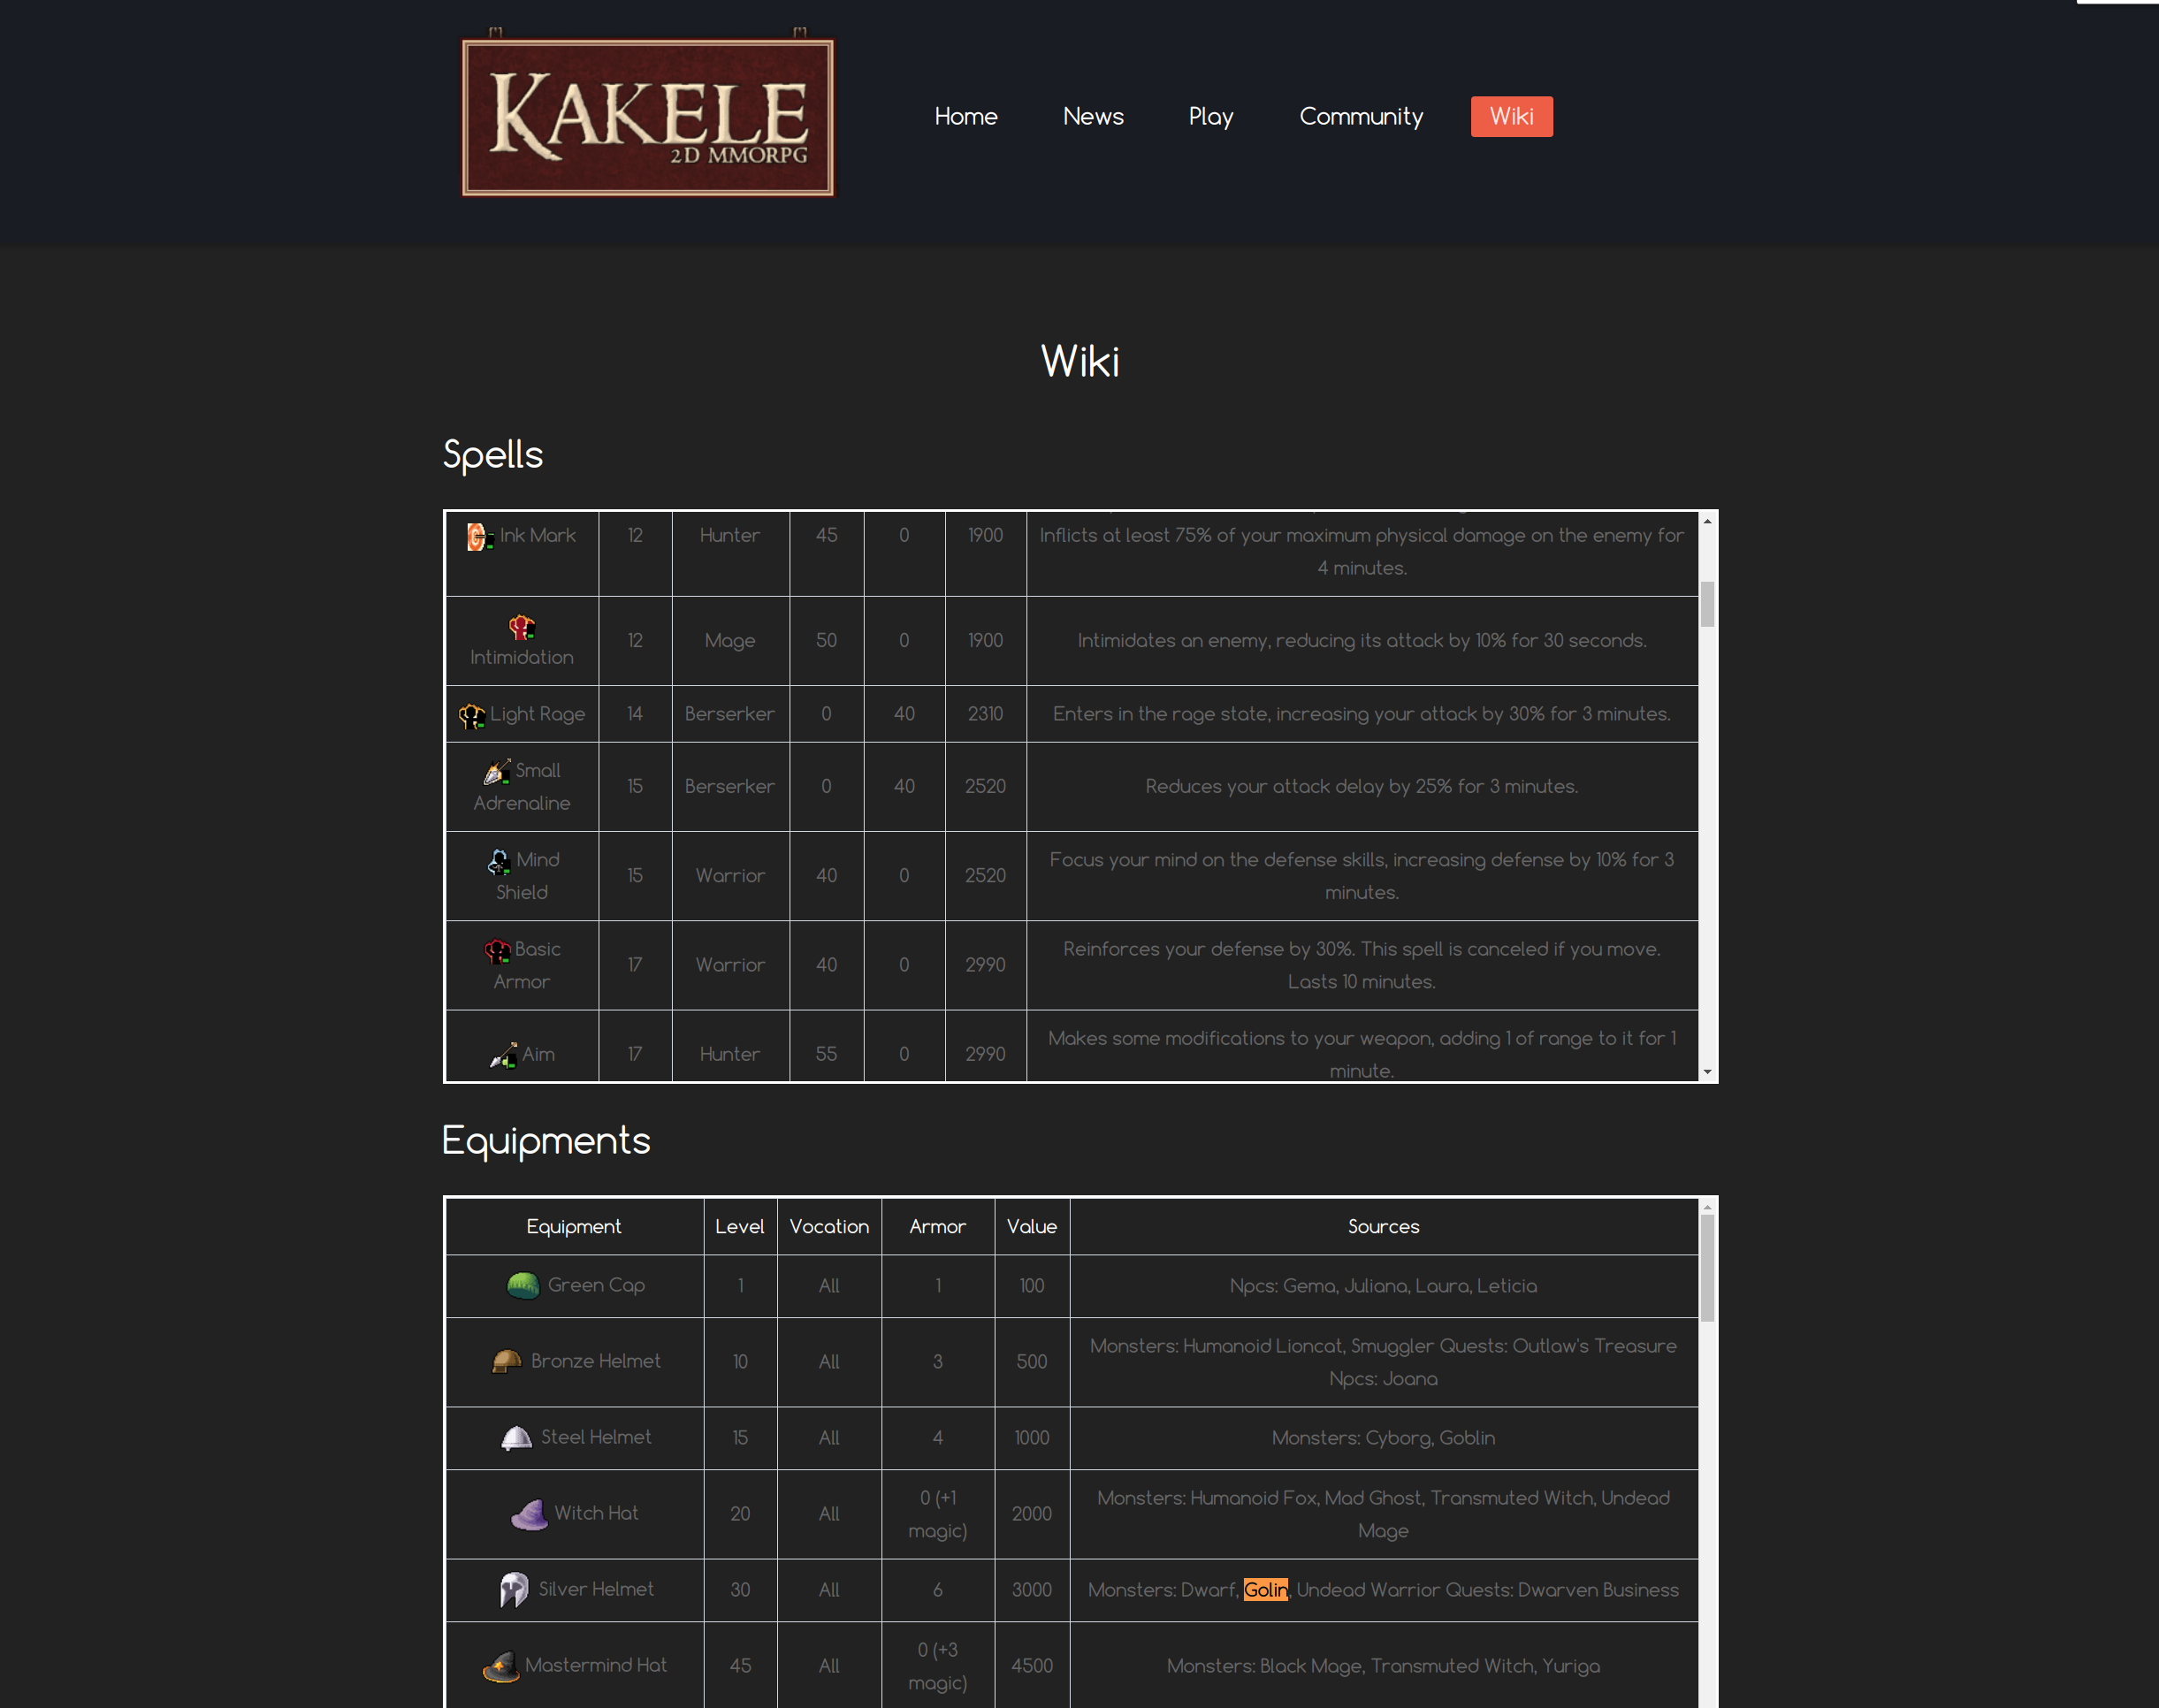 download the last version for windows Kakele Online - MMORPG